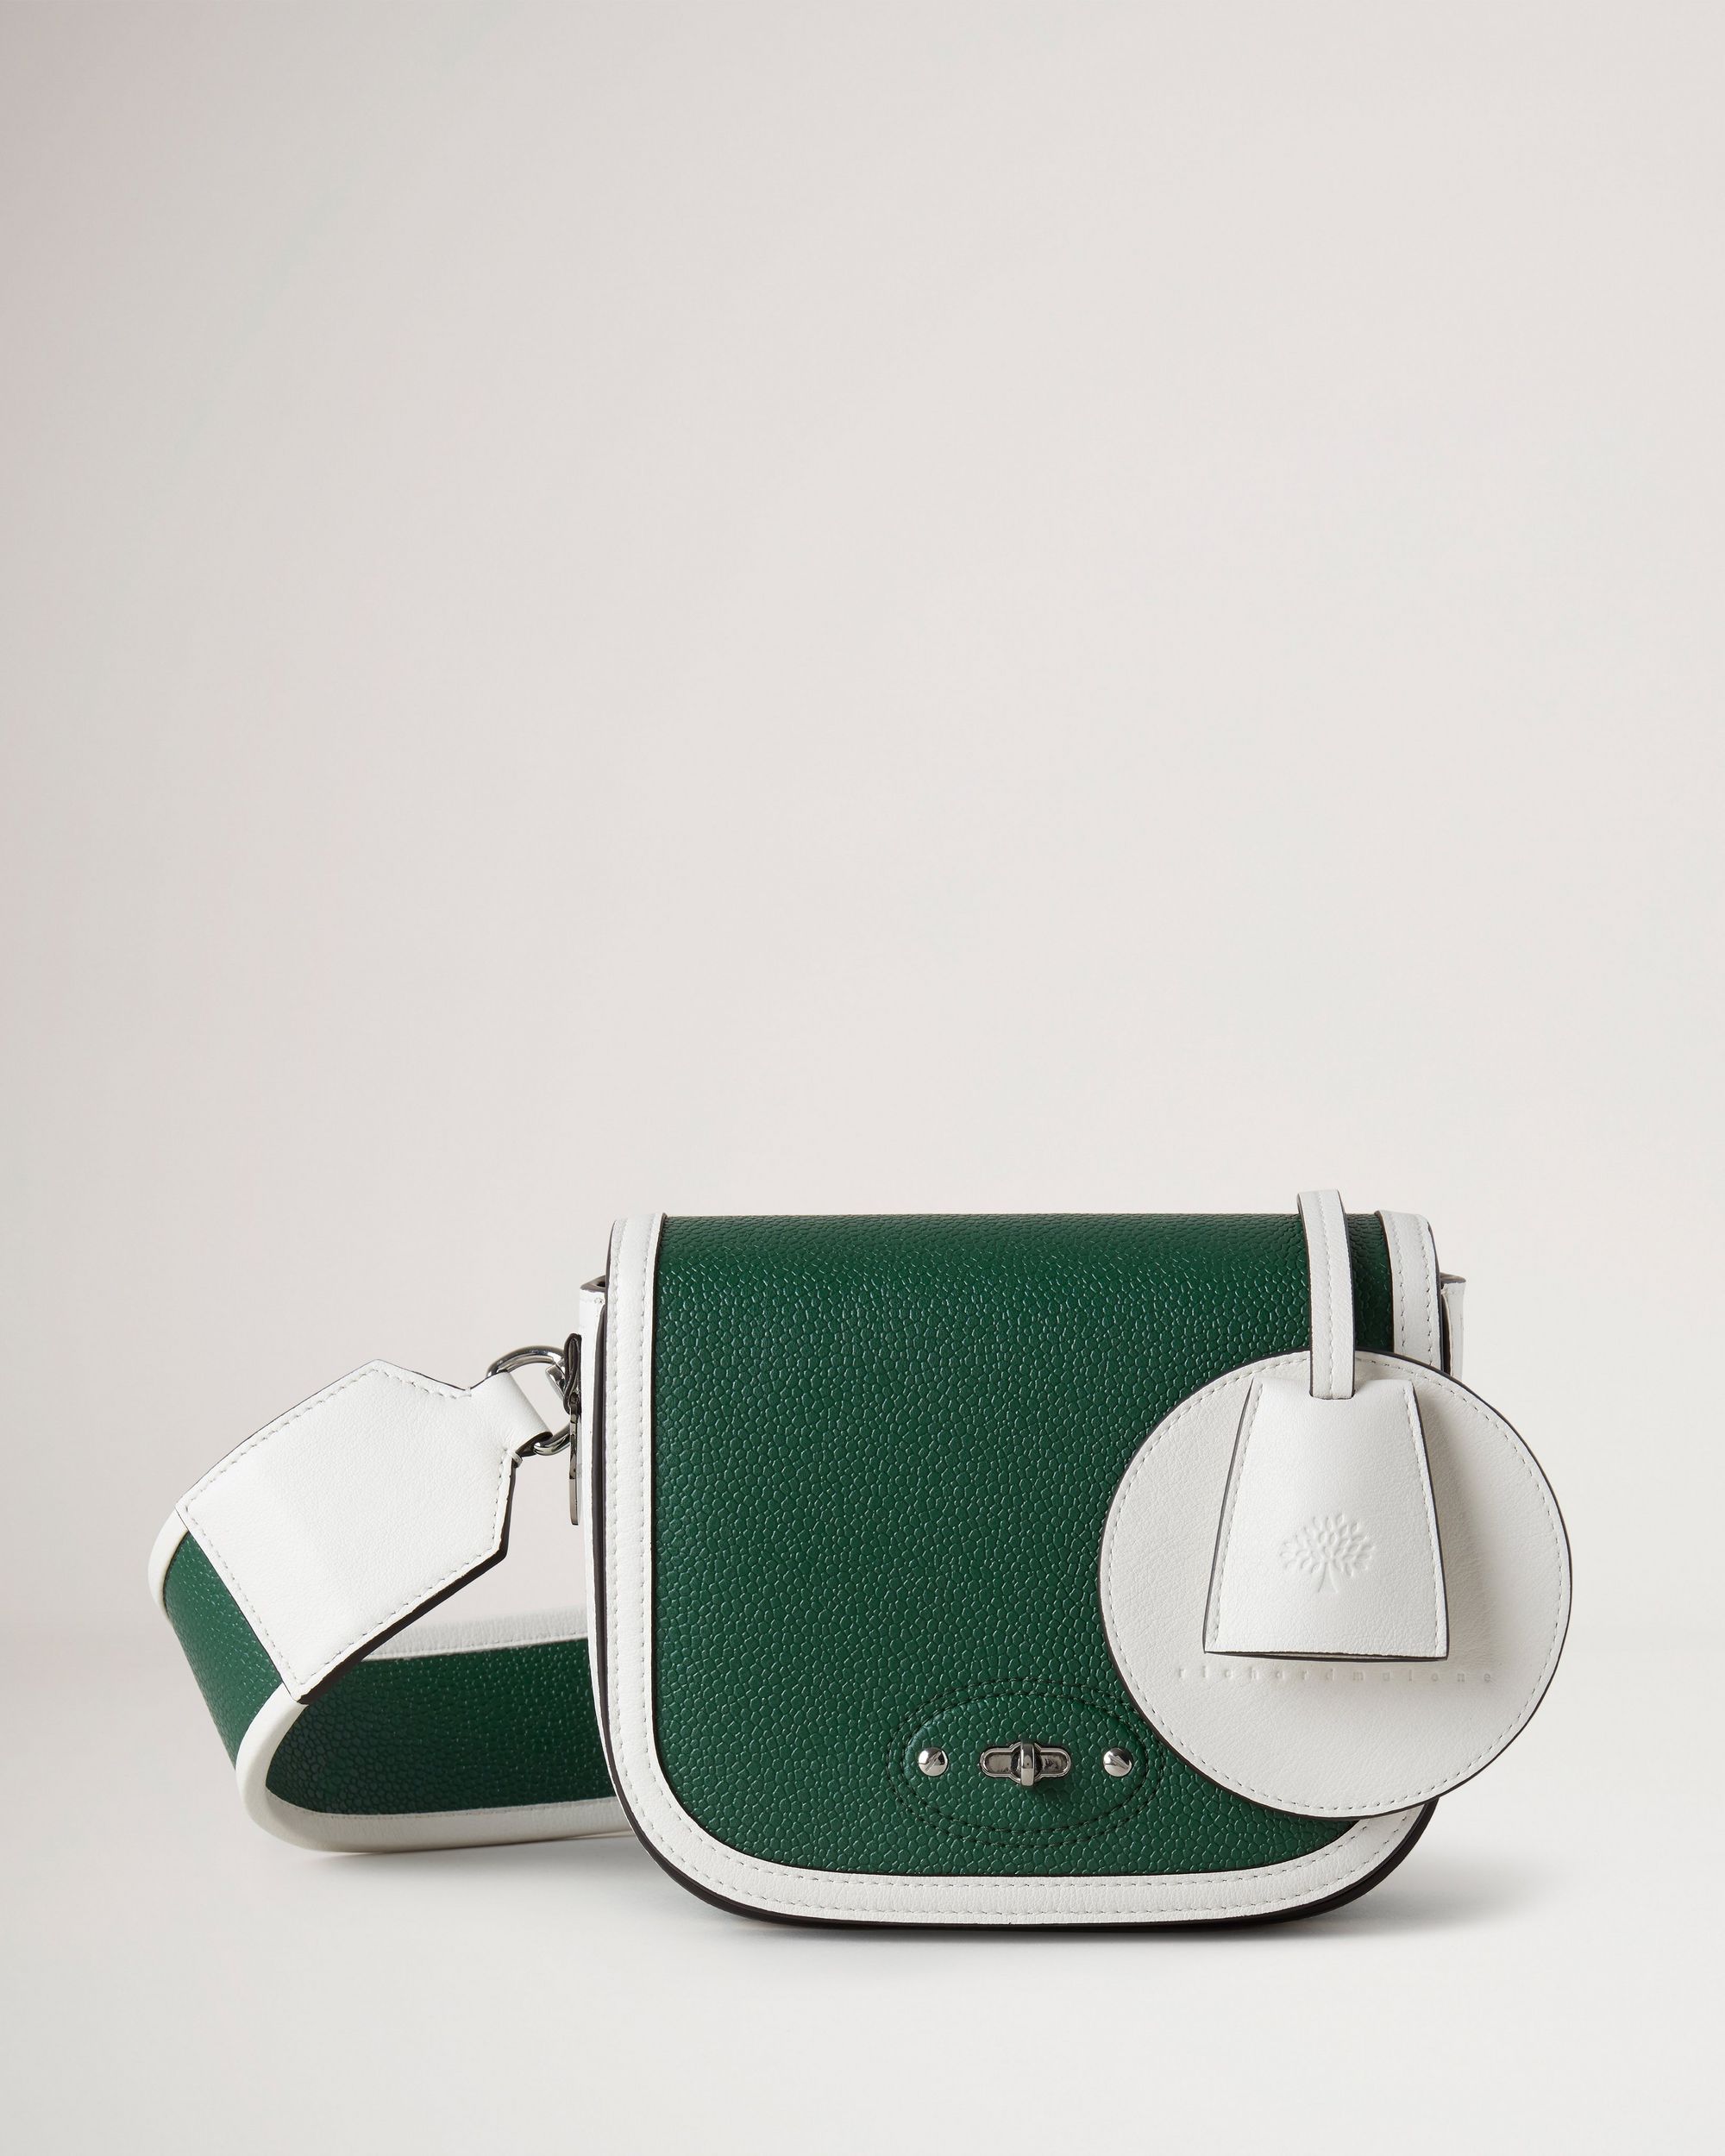 Miniature green luxury handbag